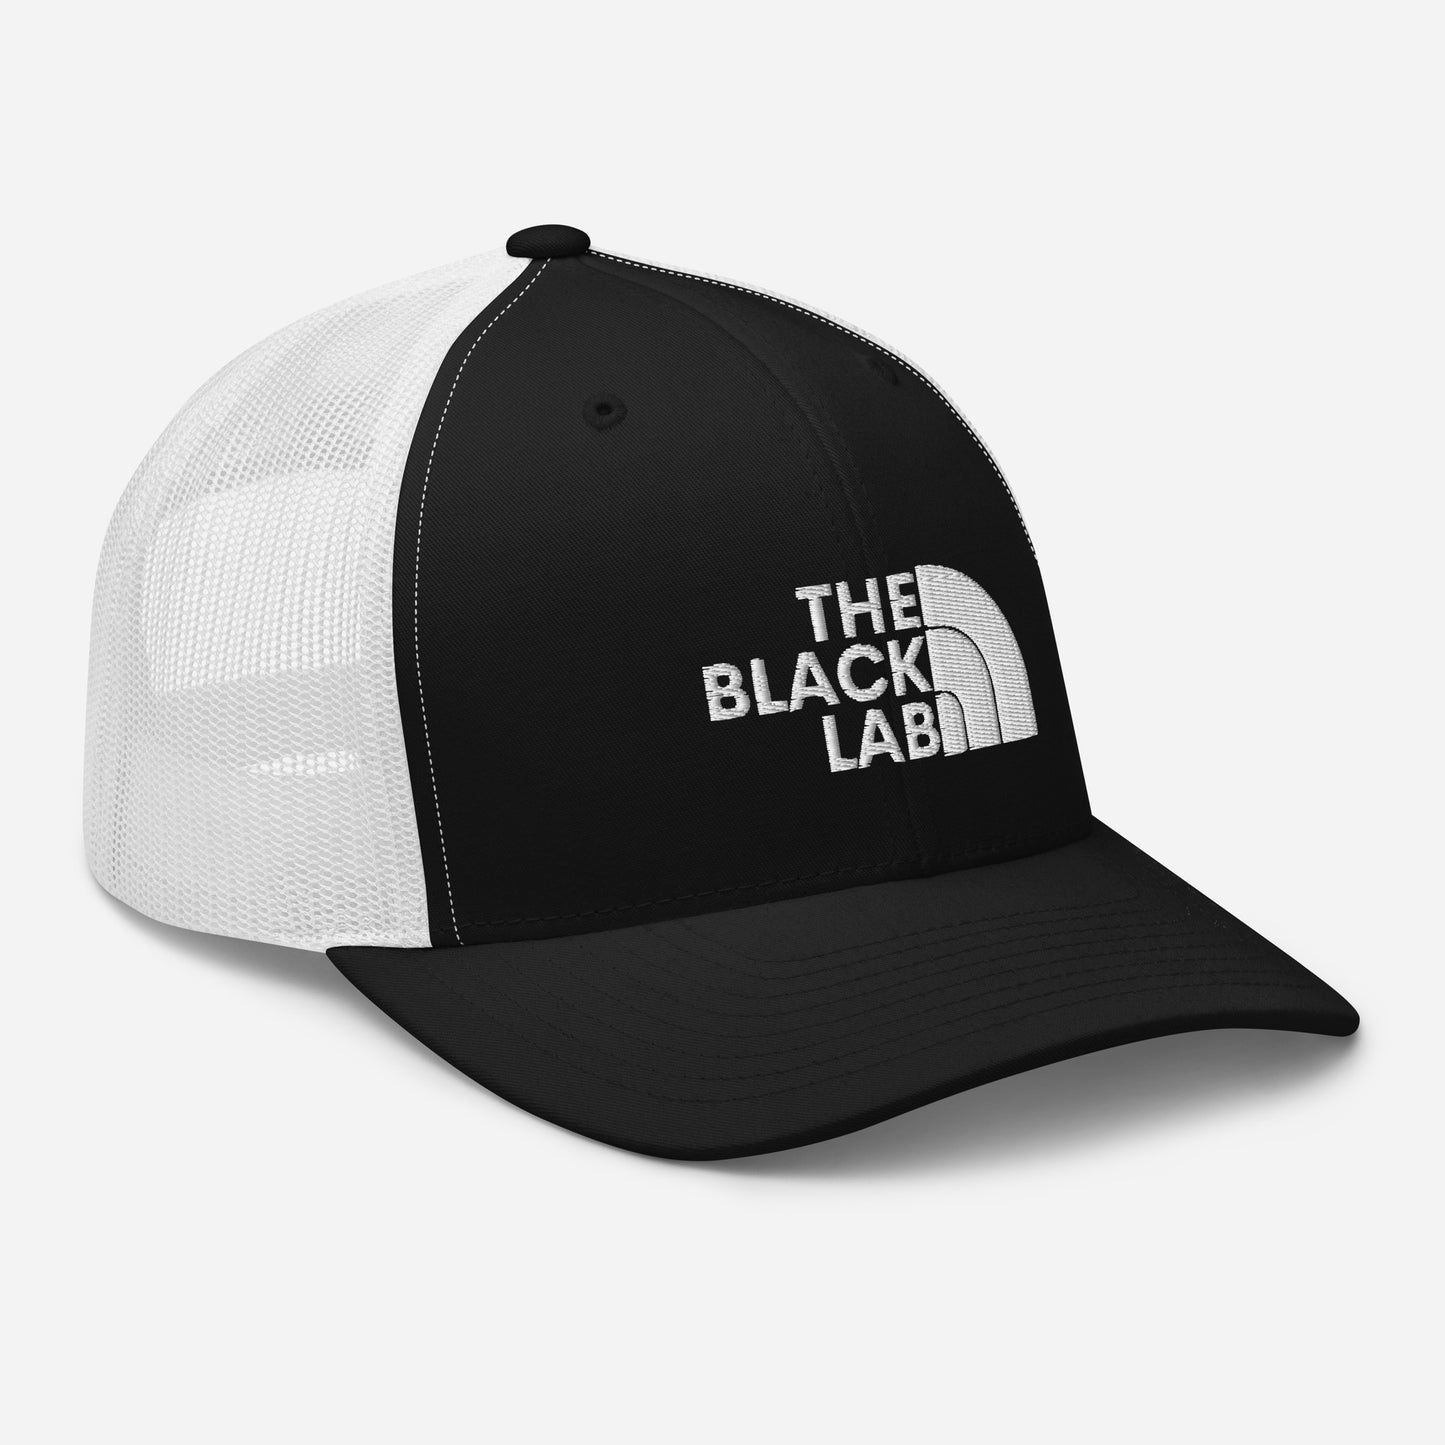 The Black Lab Trucker Cap